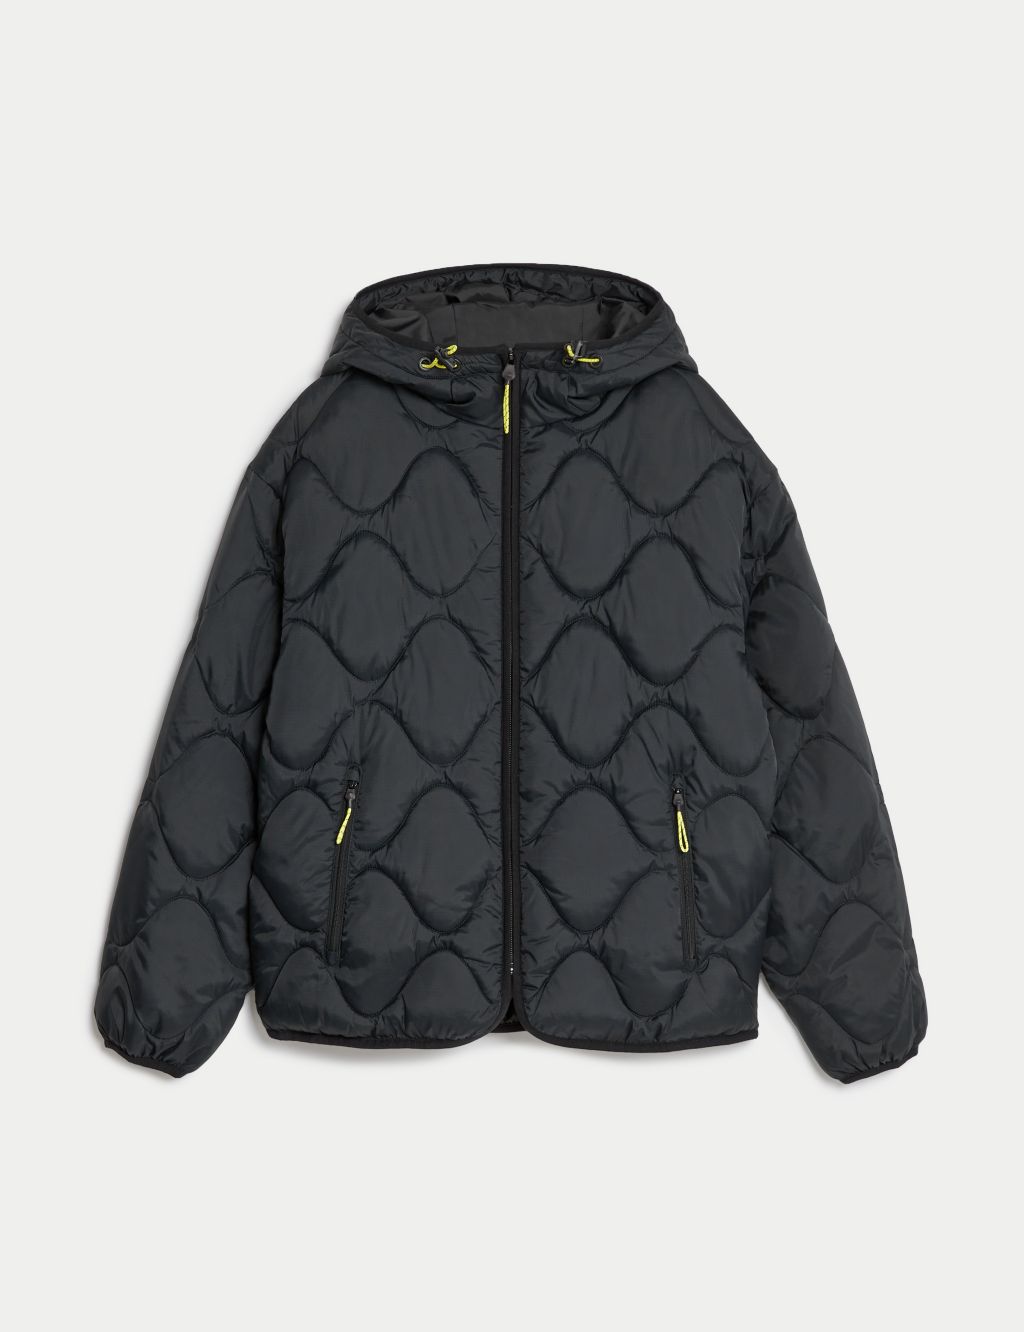 Stormwear™ Hooded Puffer Jacket | Goodmove | M&S